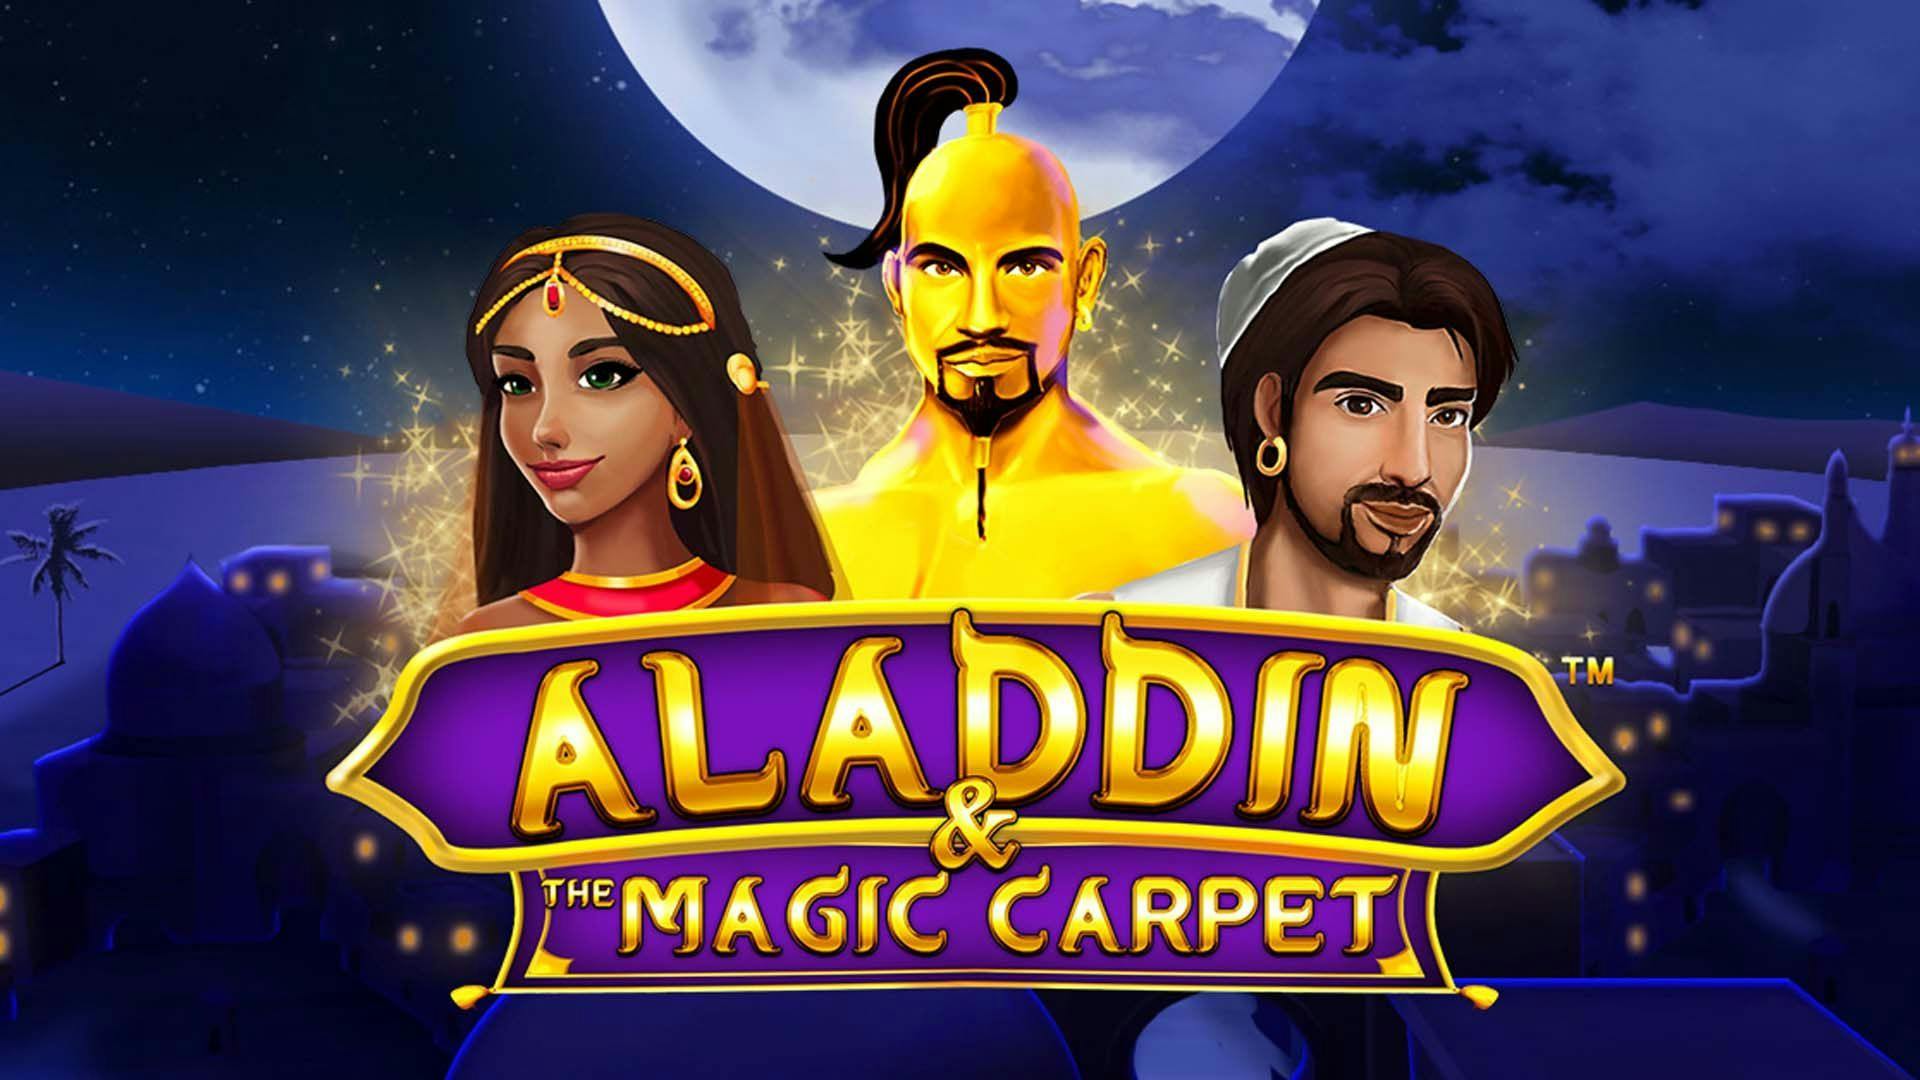 Aladdin & The Magic Carpet Slot Machine Online Free Game Play